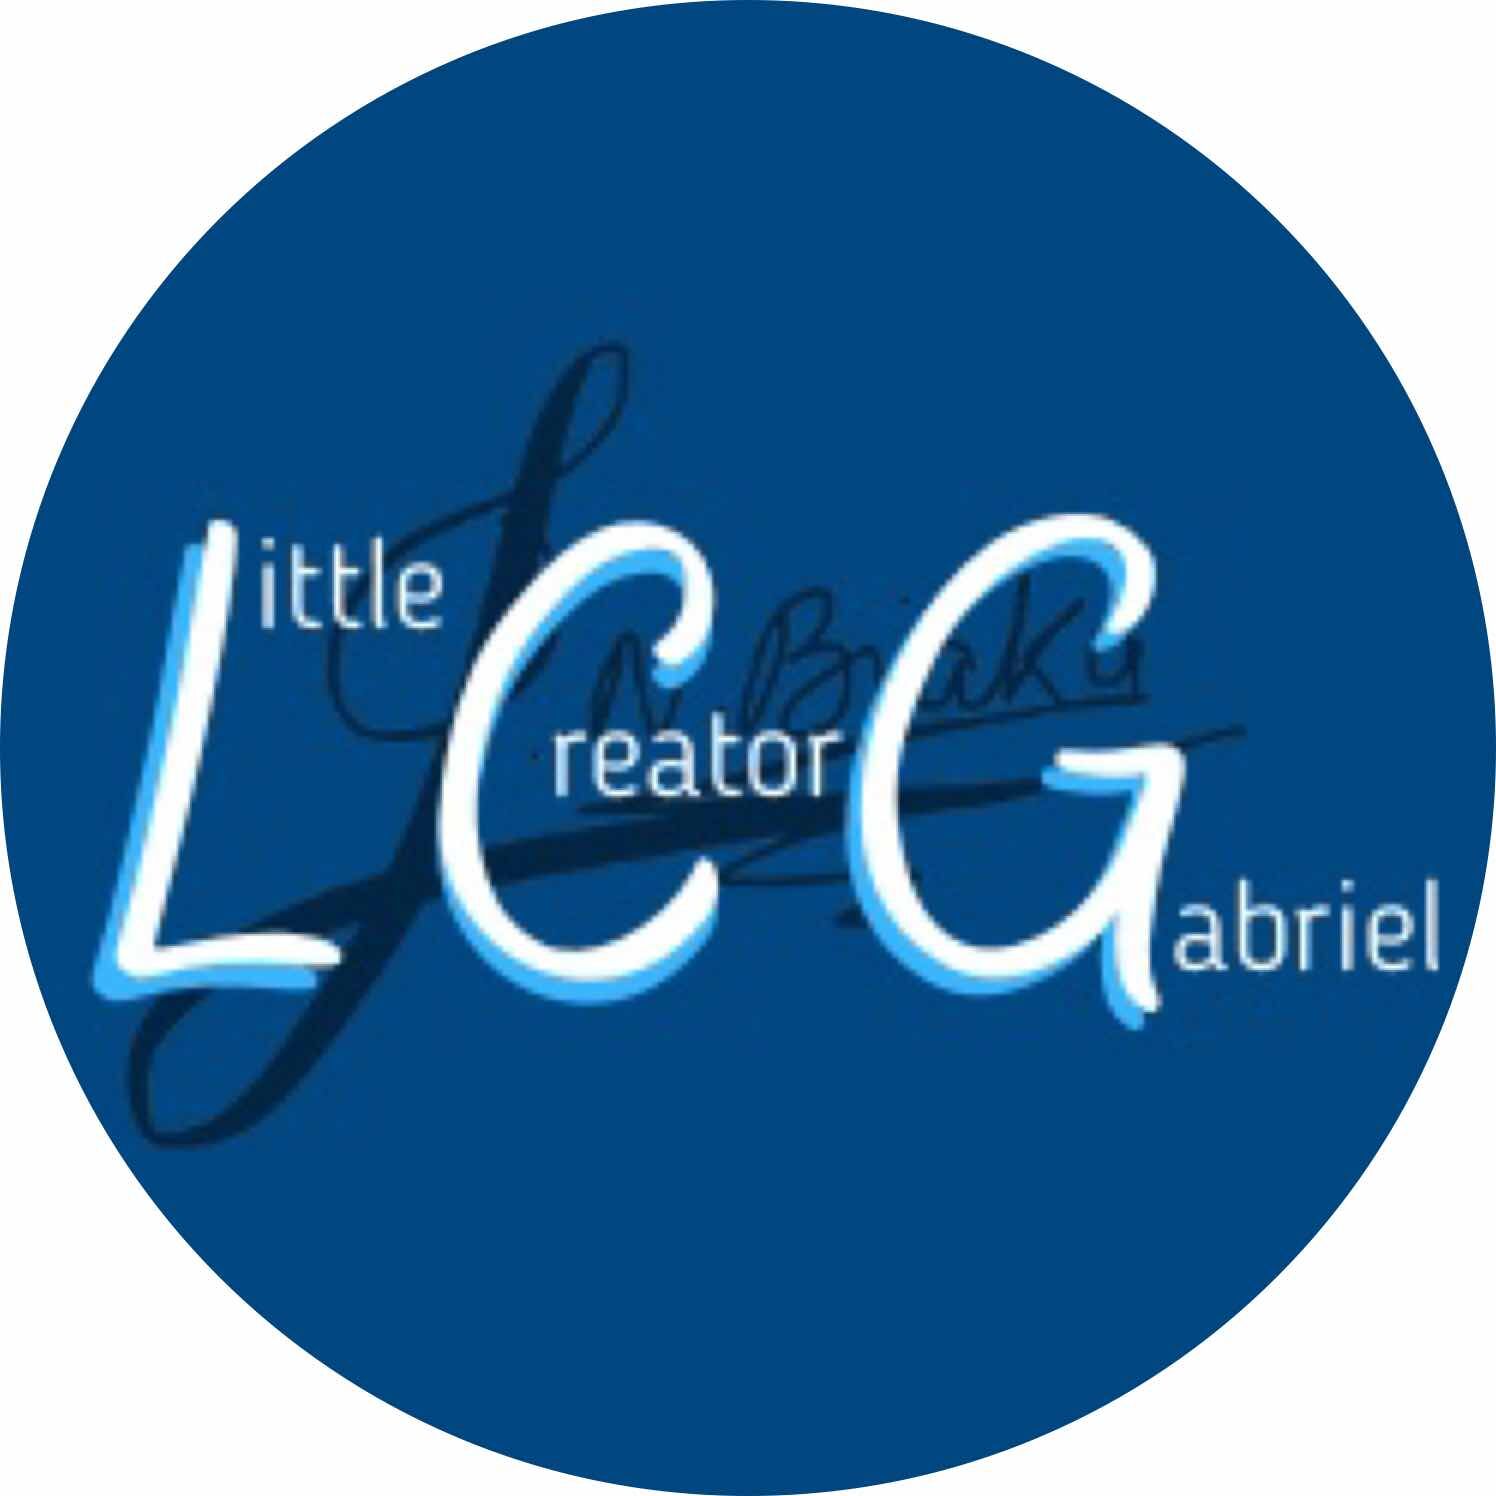 Little_creator_gabri